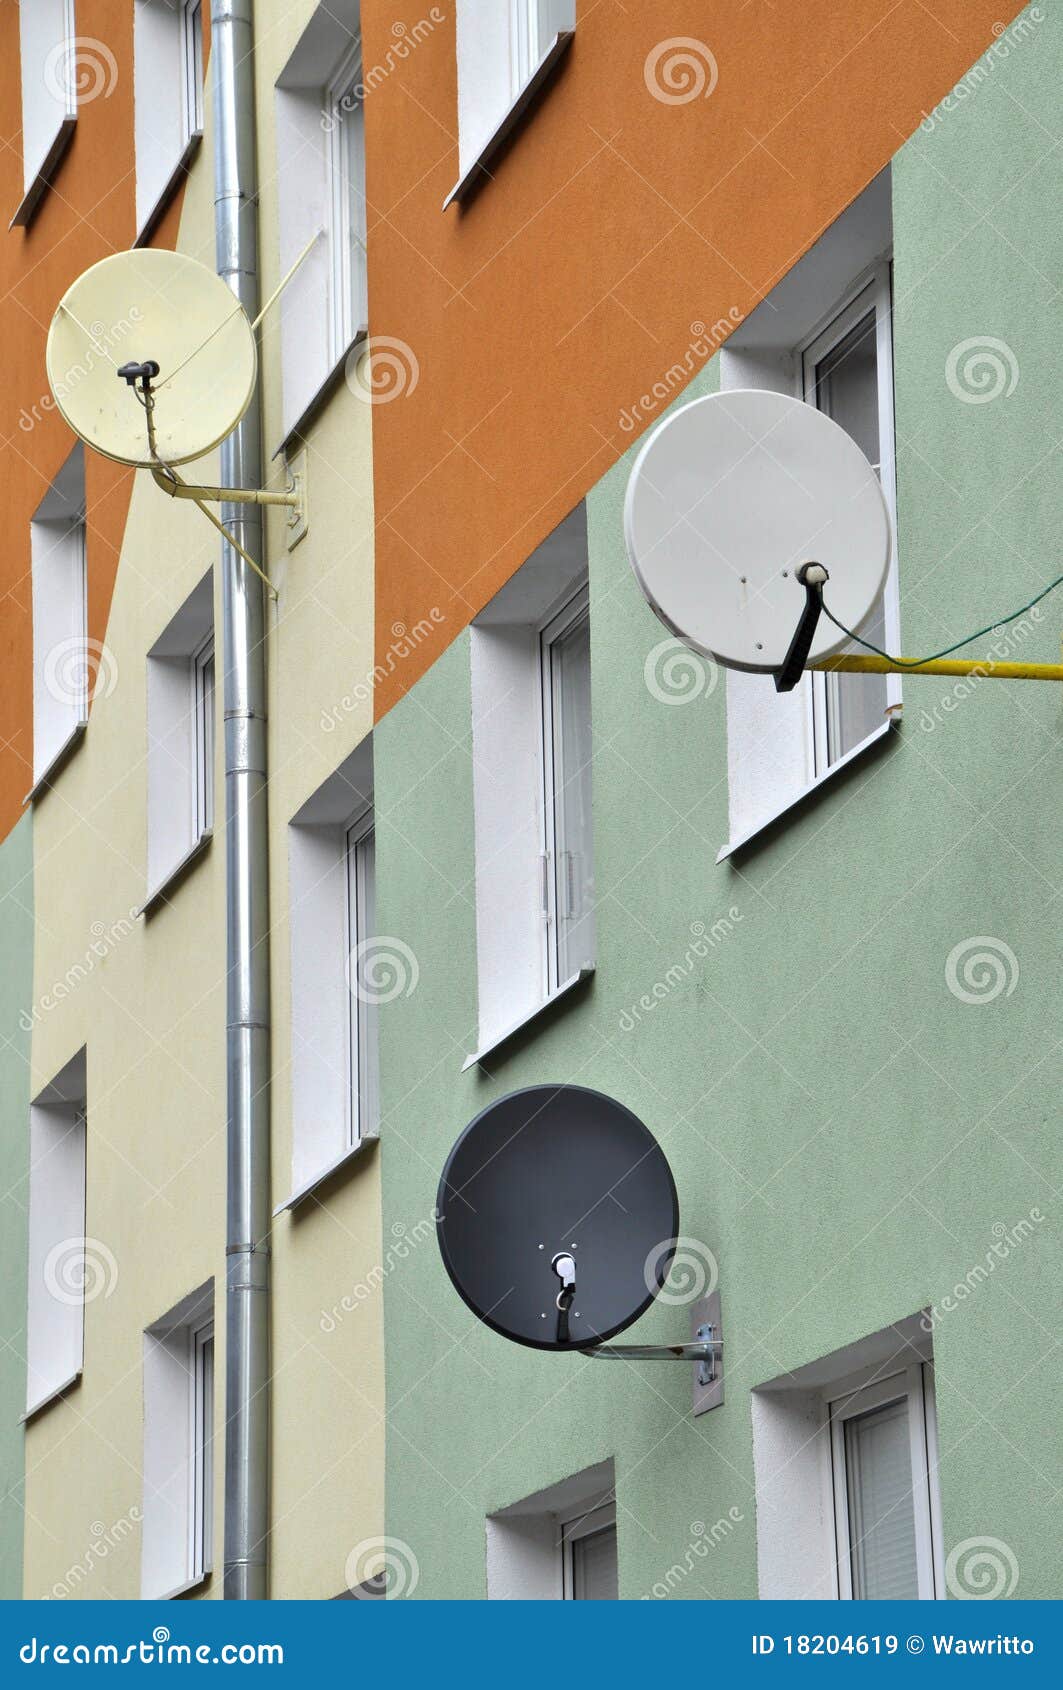 satellite dishes